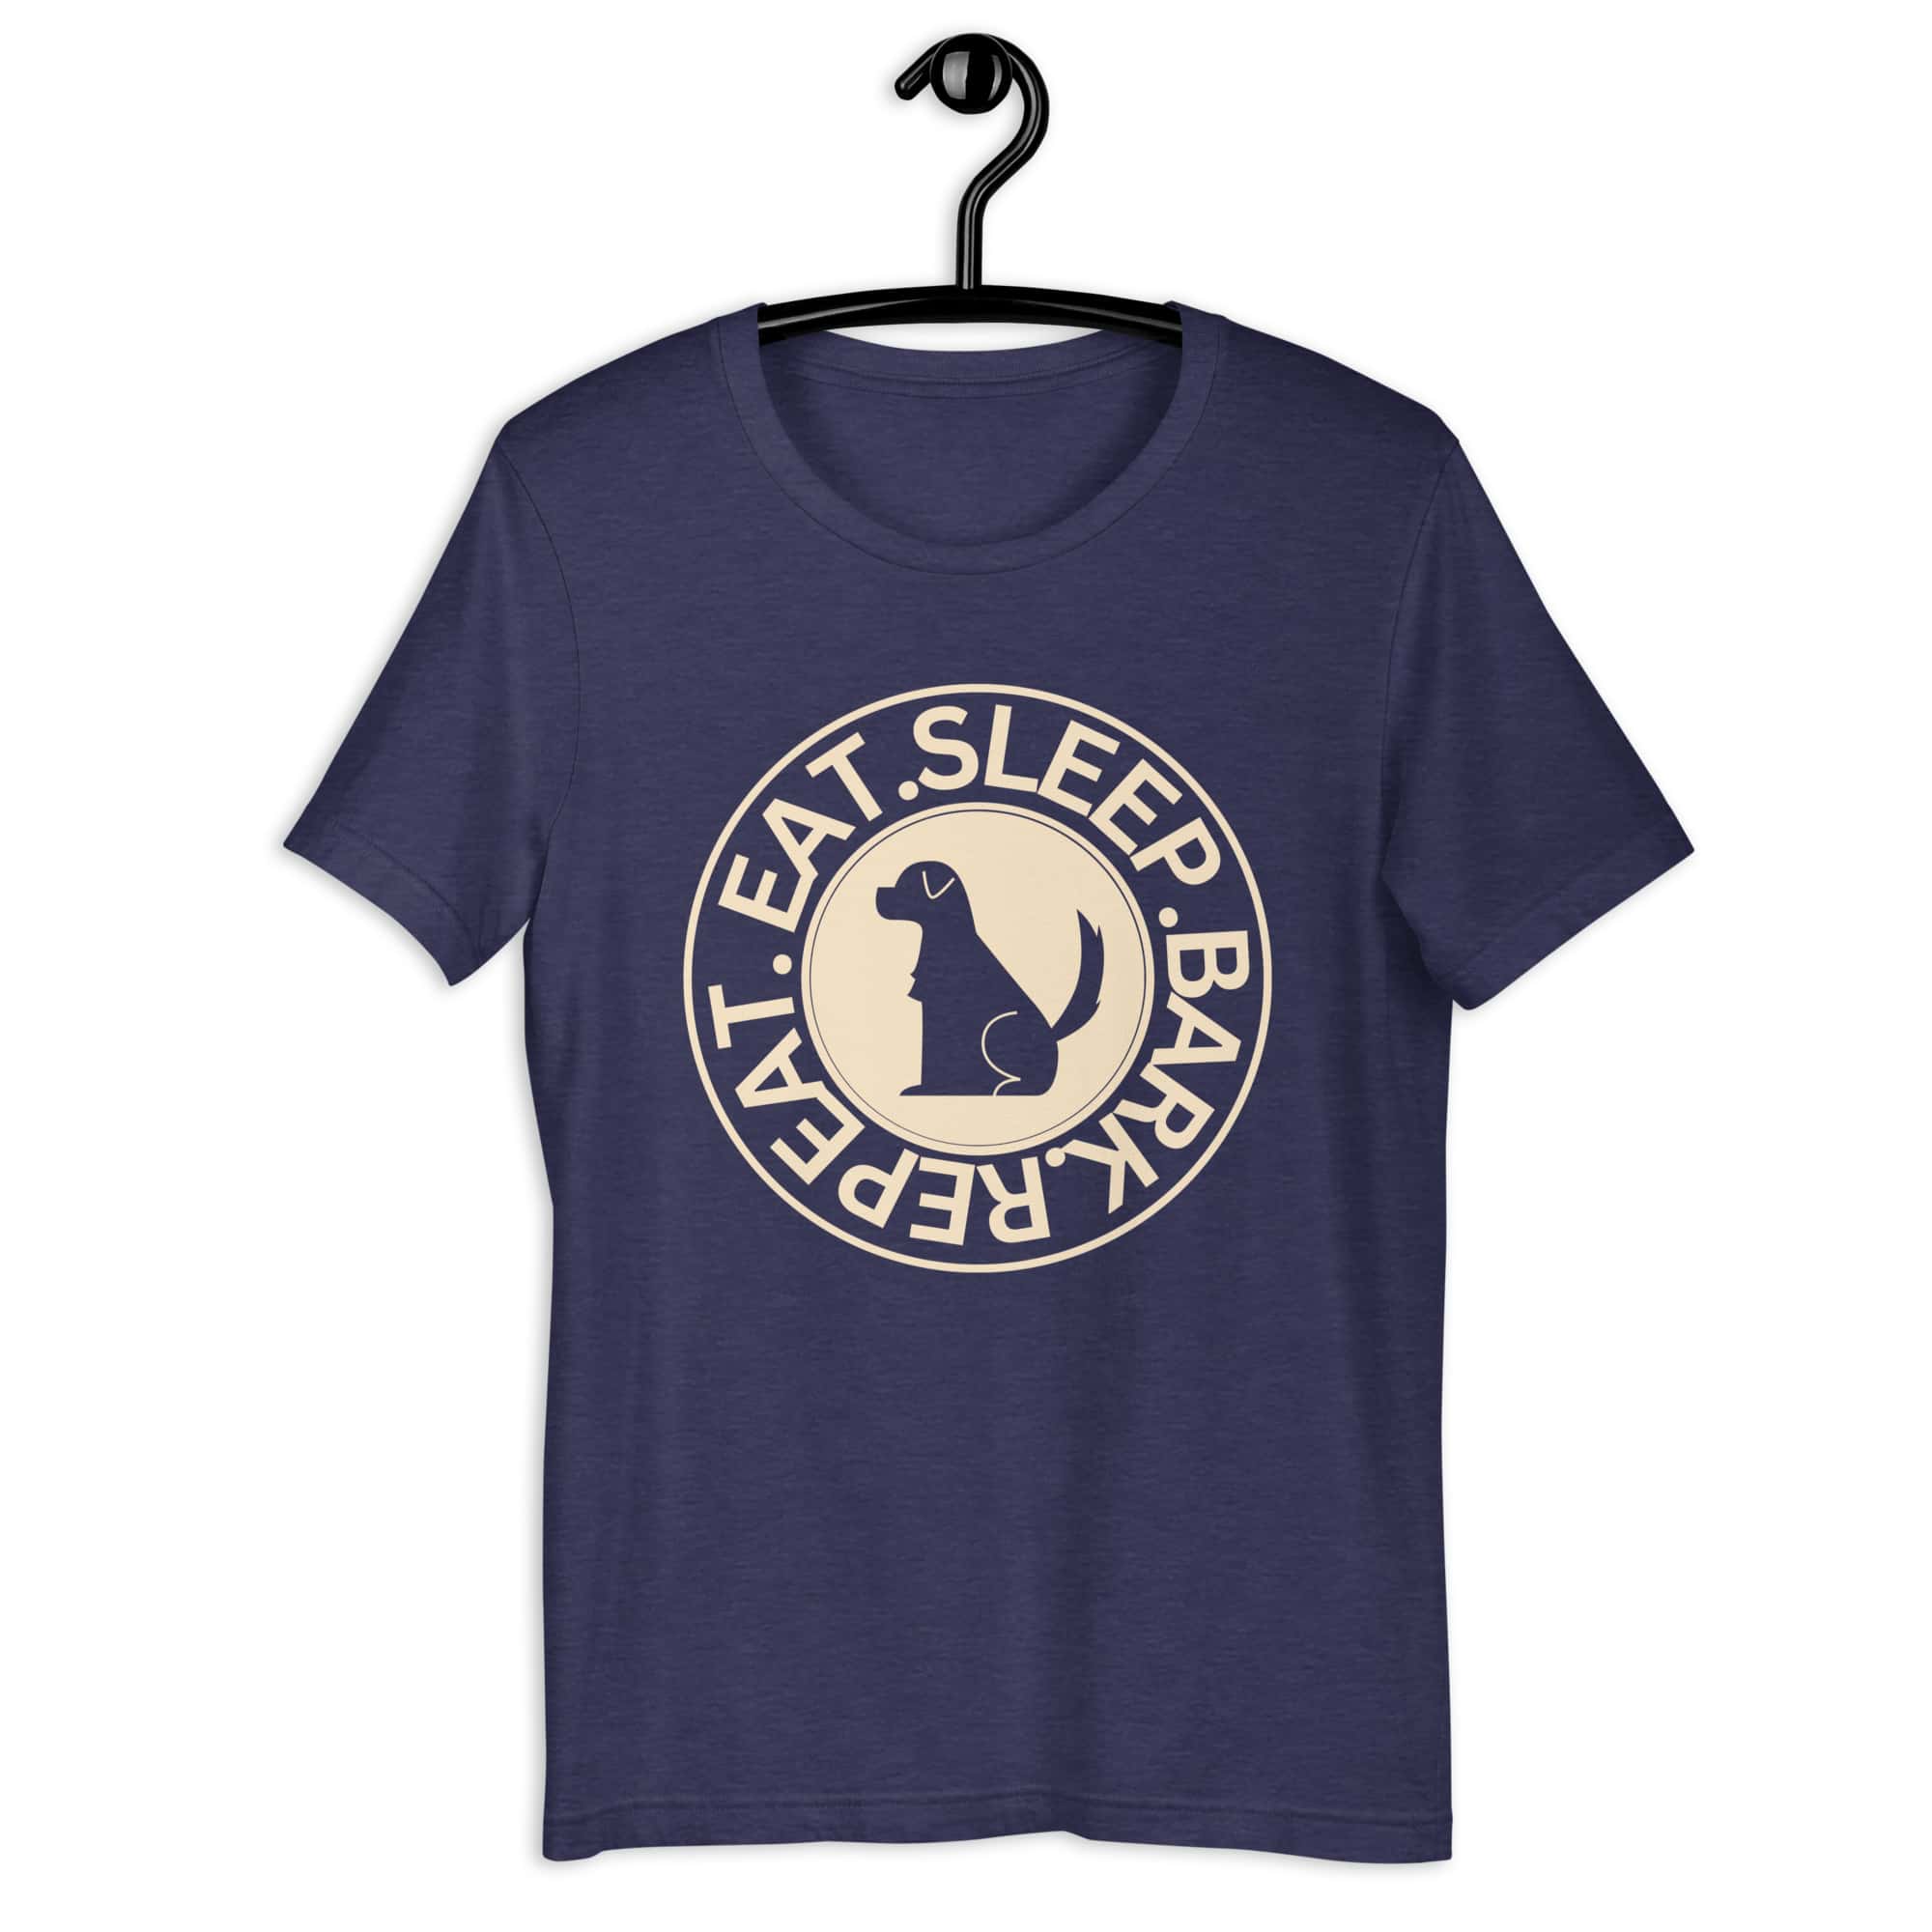 Eat Sleep Bark Repeat Ansylvanian Hound Unisex T-Shirt. Midnight Navy